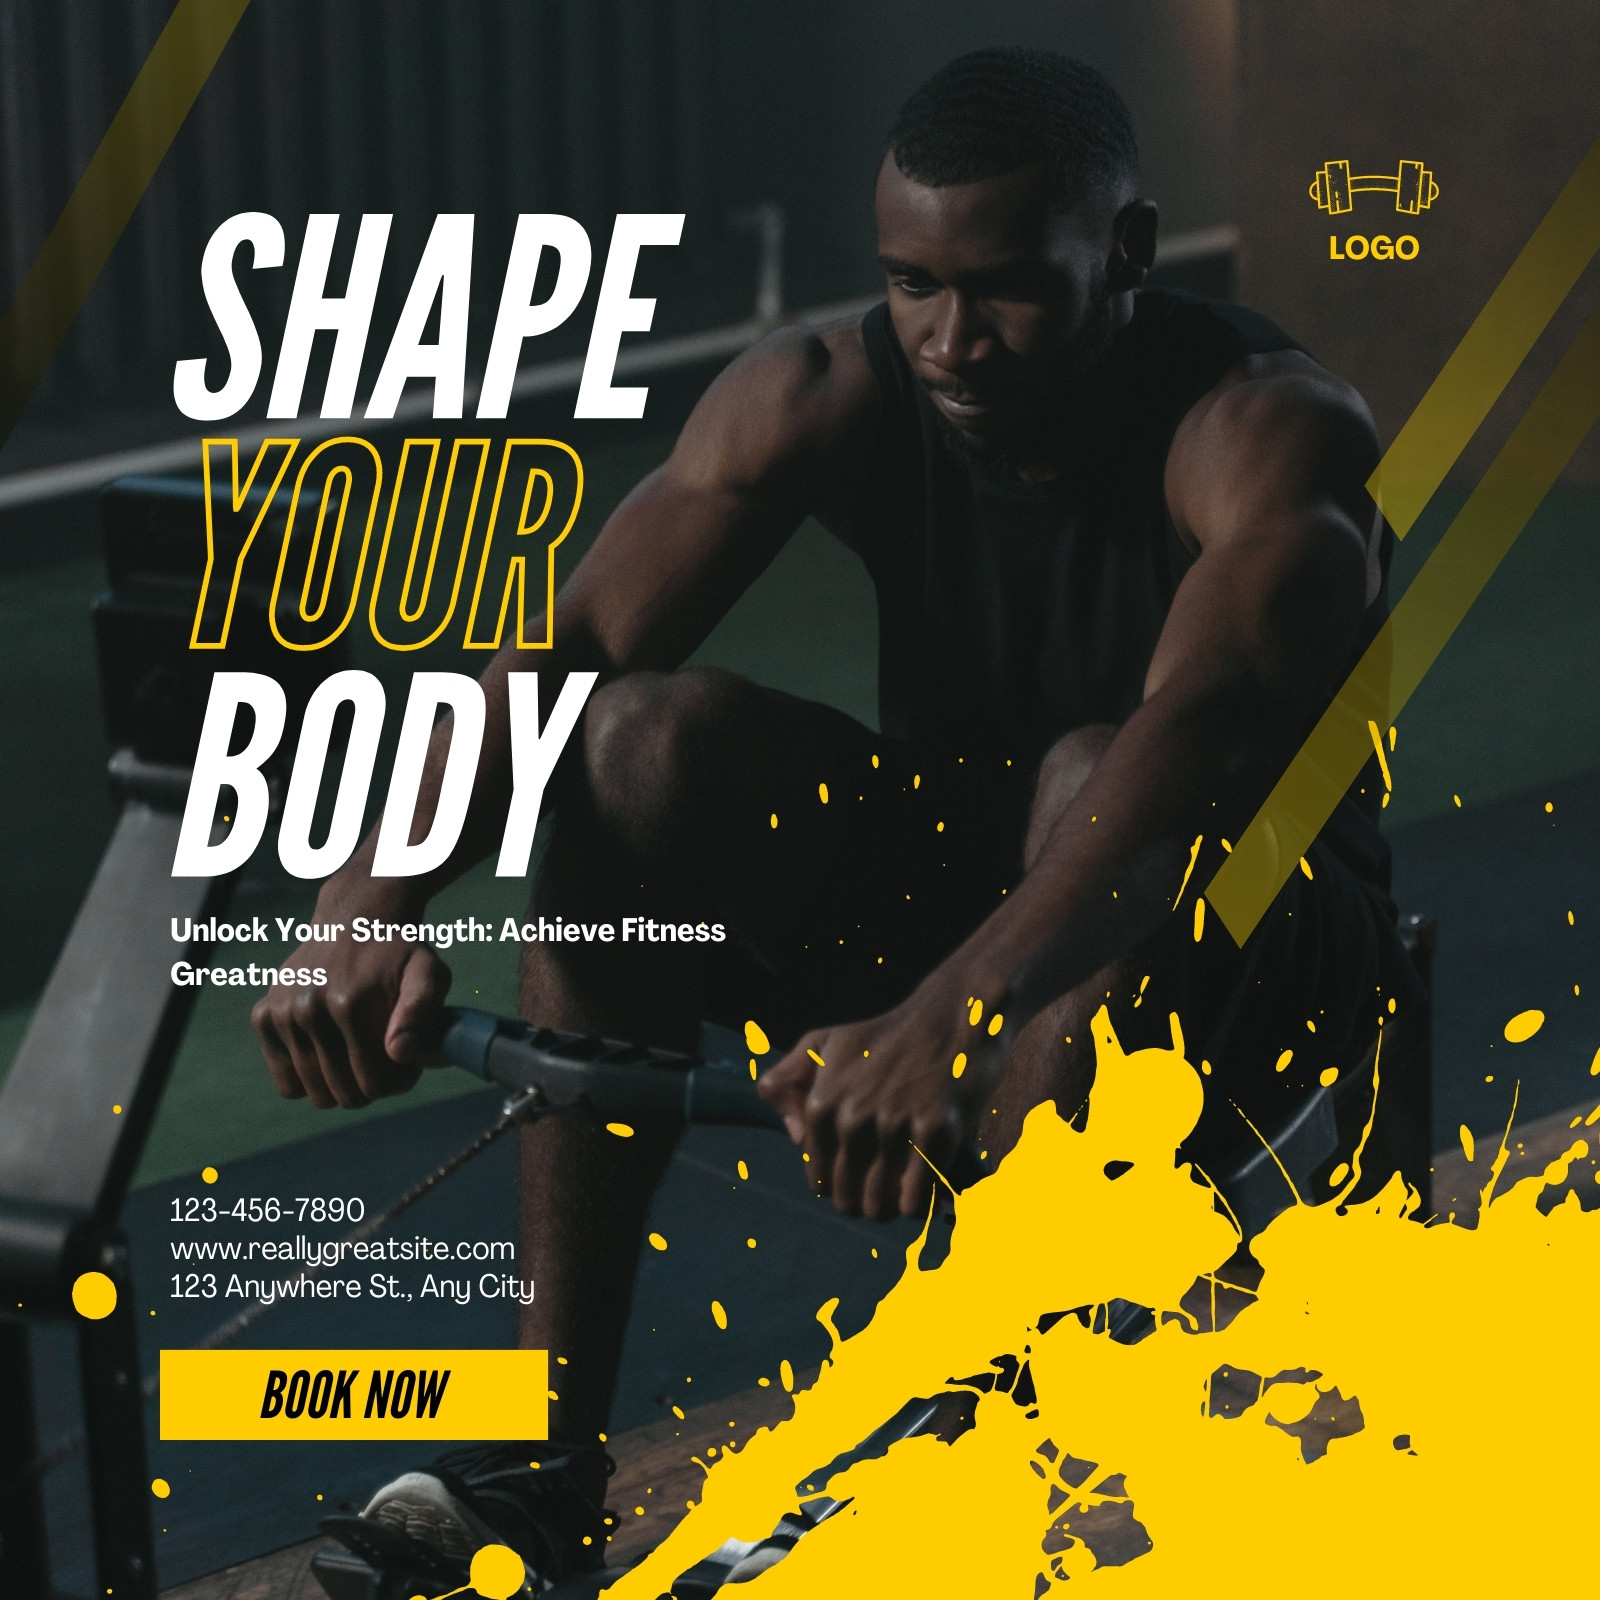 Download Gym Gradient health & fitness post social media banner